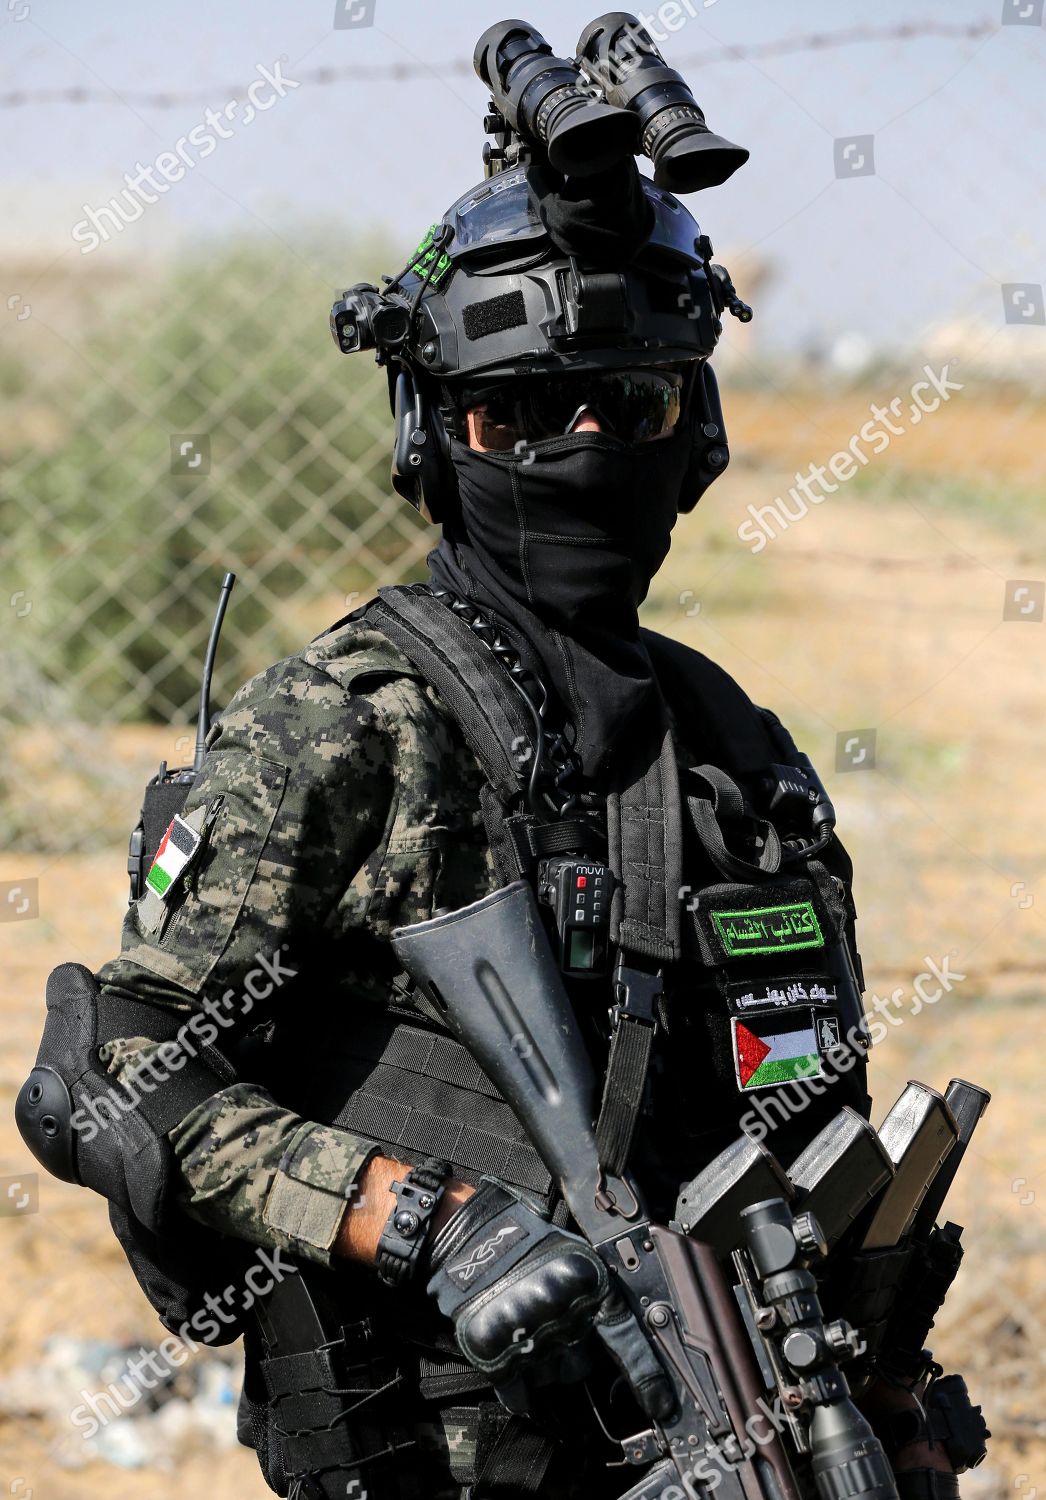 hamas-military-wing-parade-khan-yunis-palestinian-territories-shutterstock-editorial-10472278f.jpg